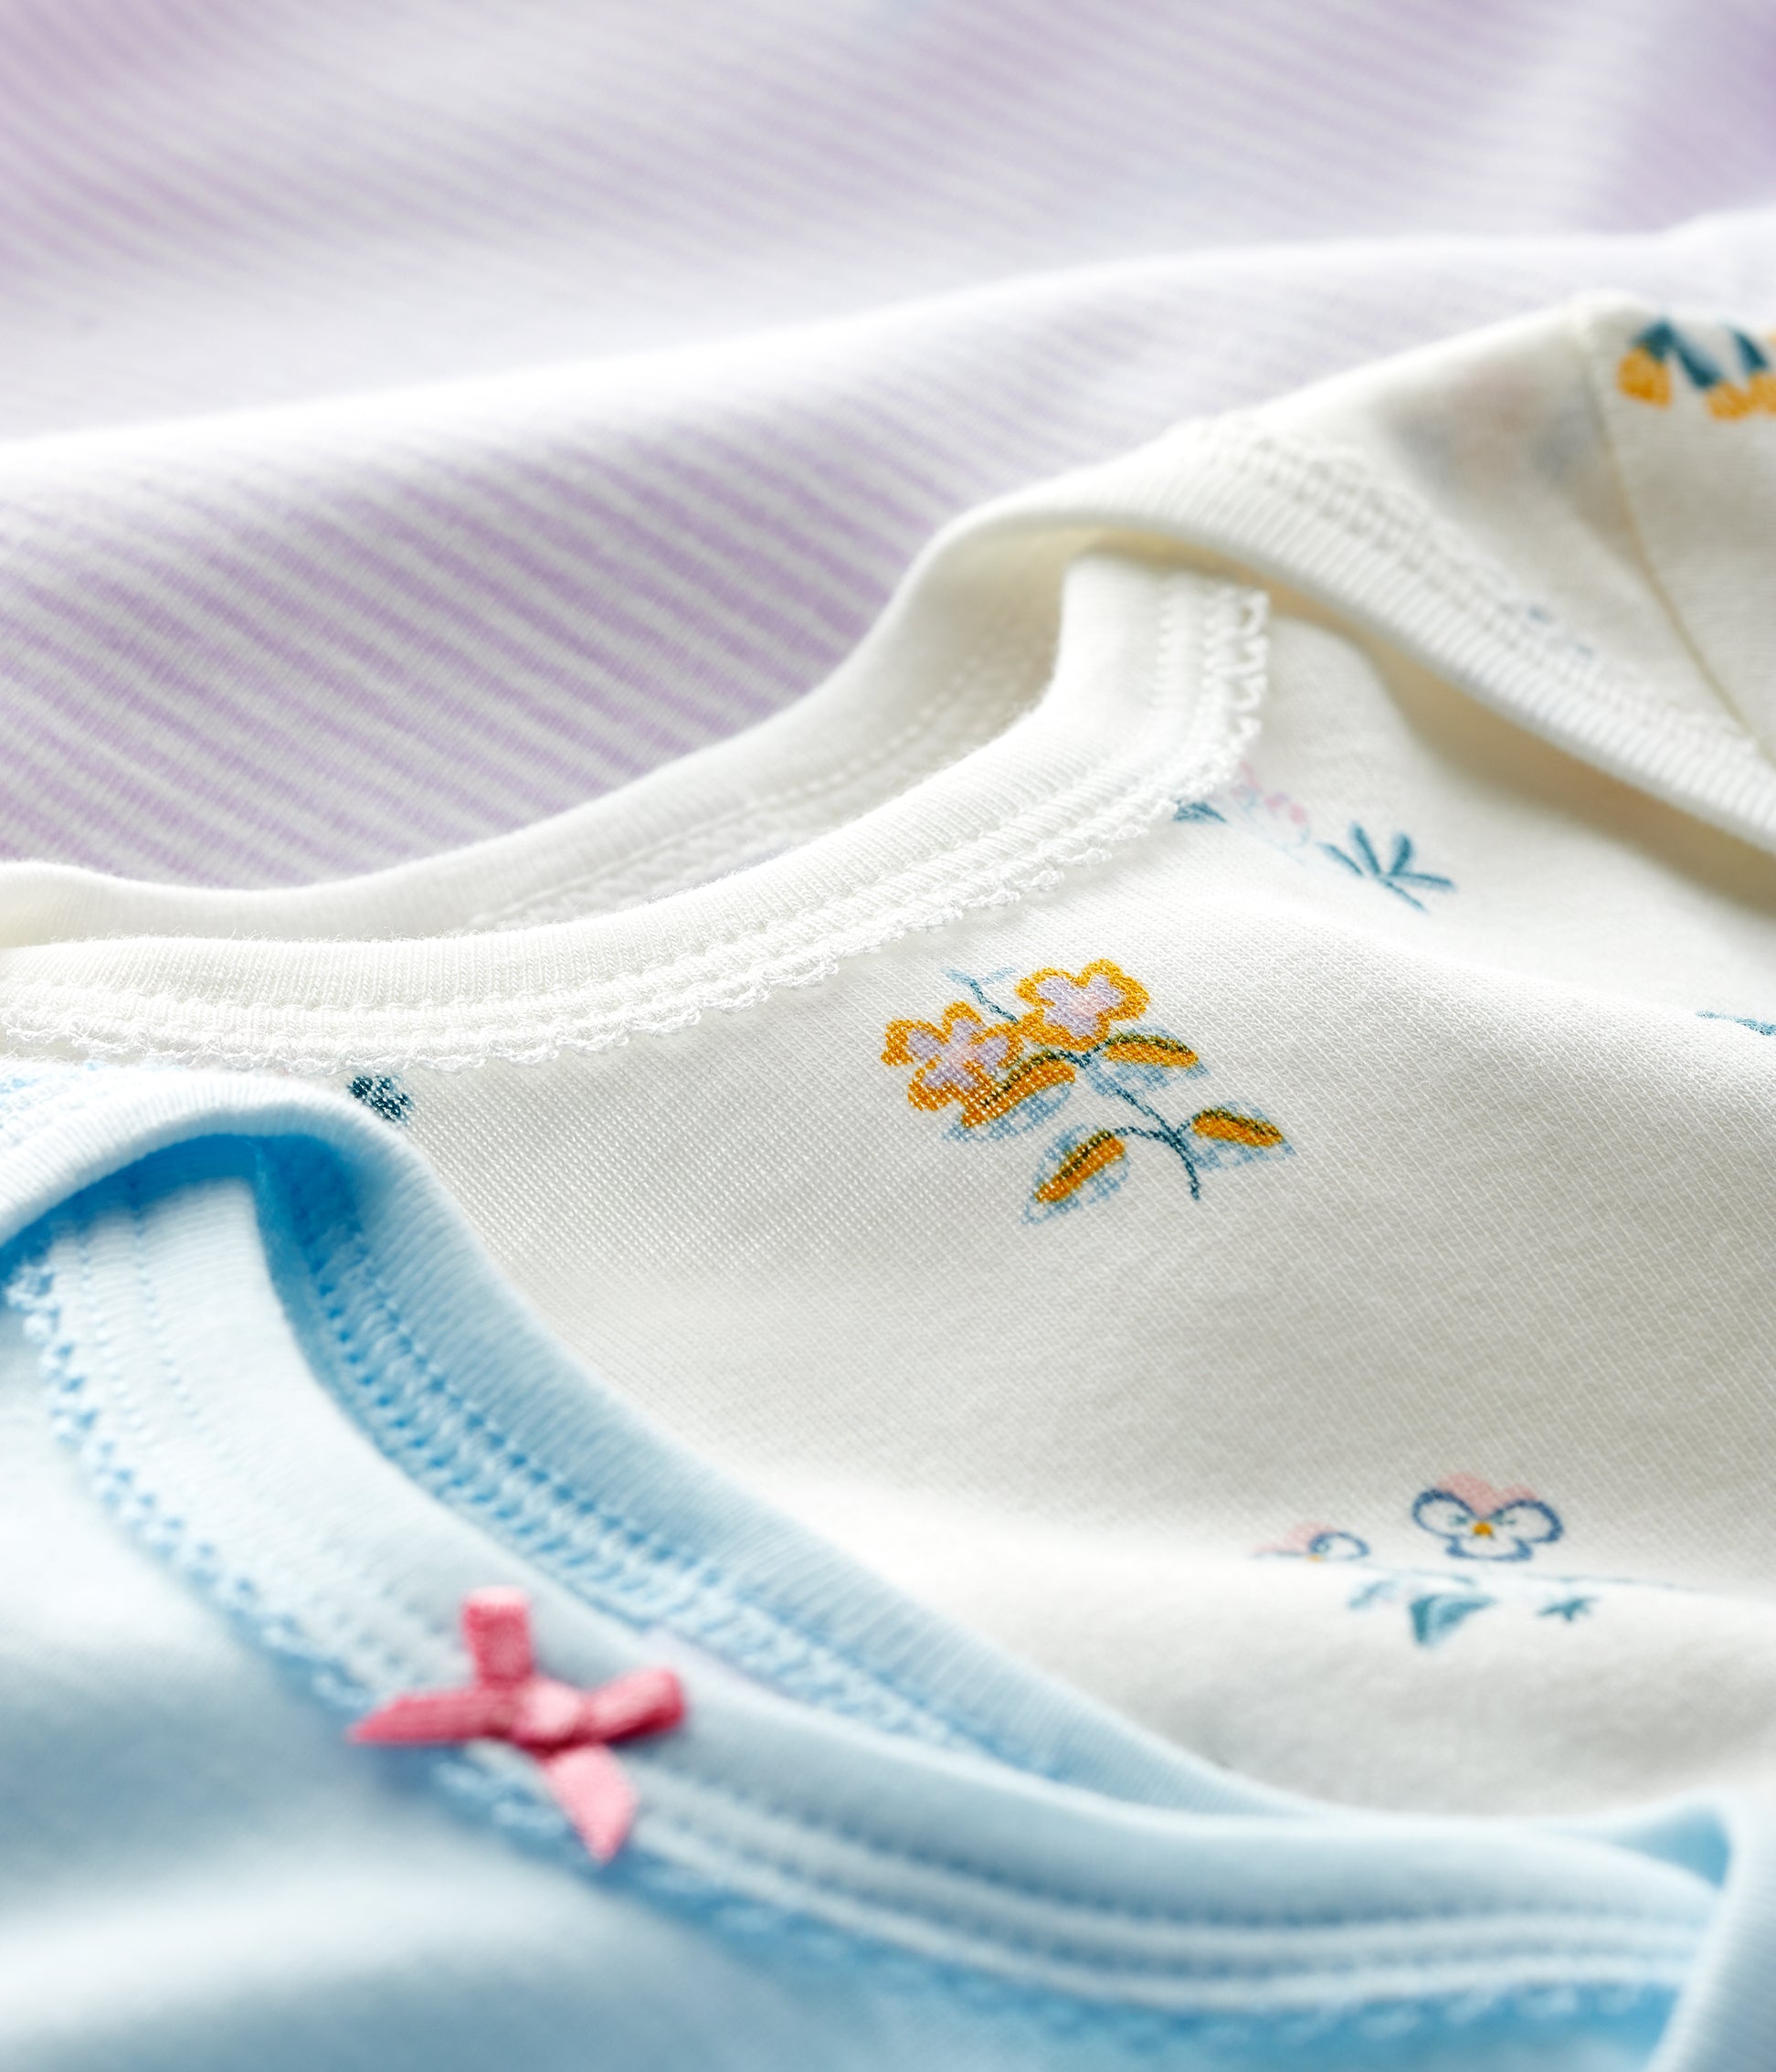 Baby Girls Multicolor Cotton babysuit Sets